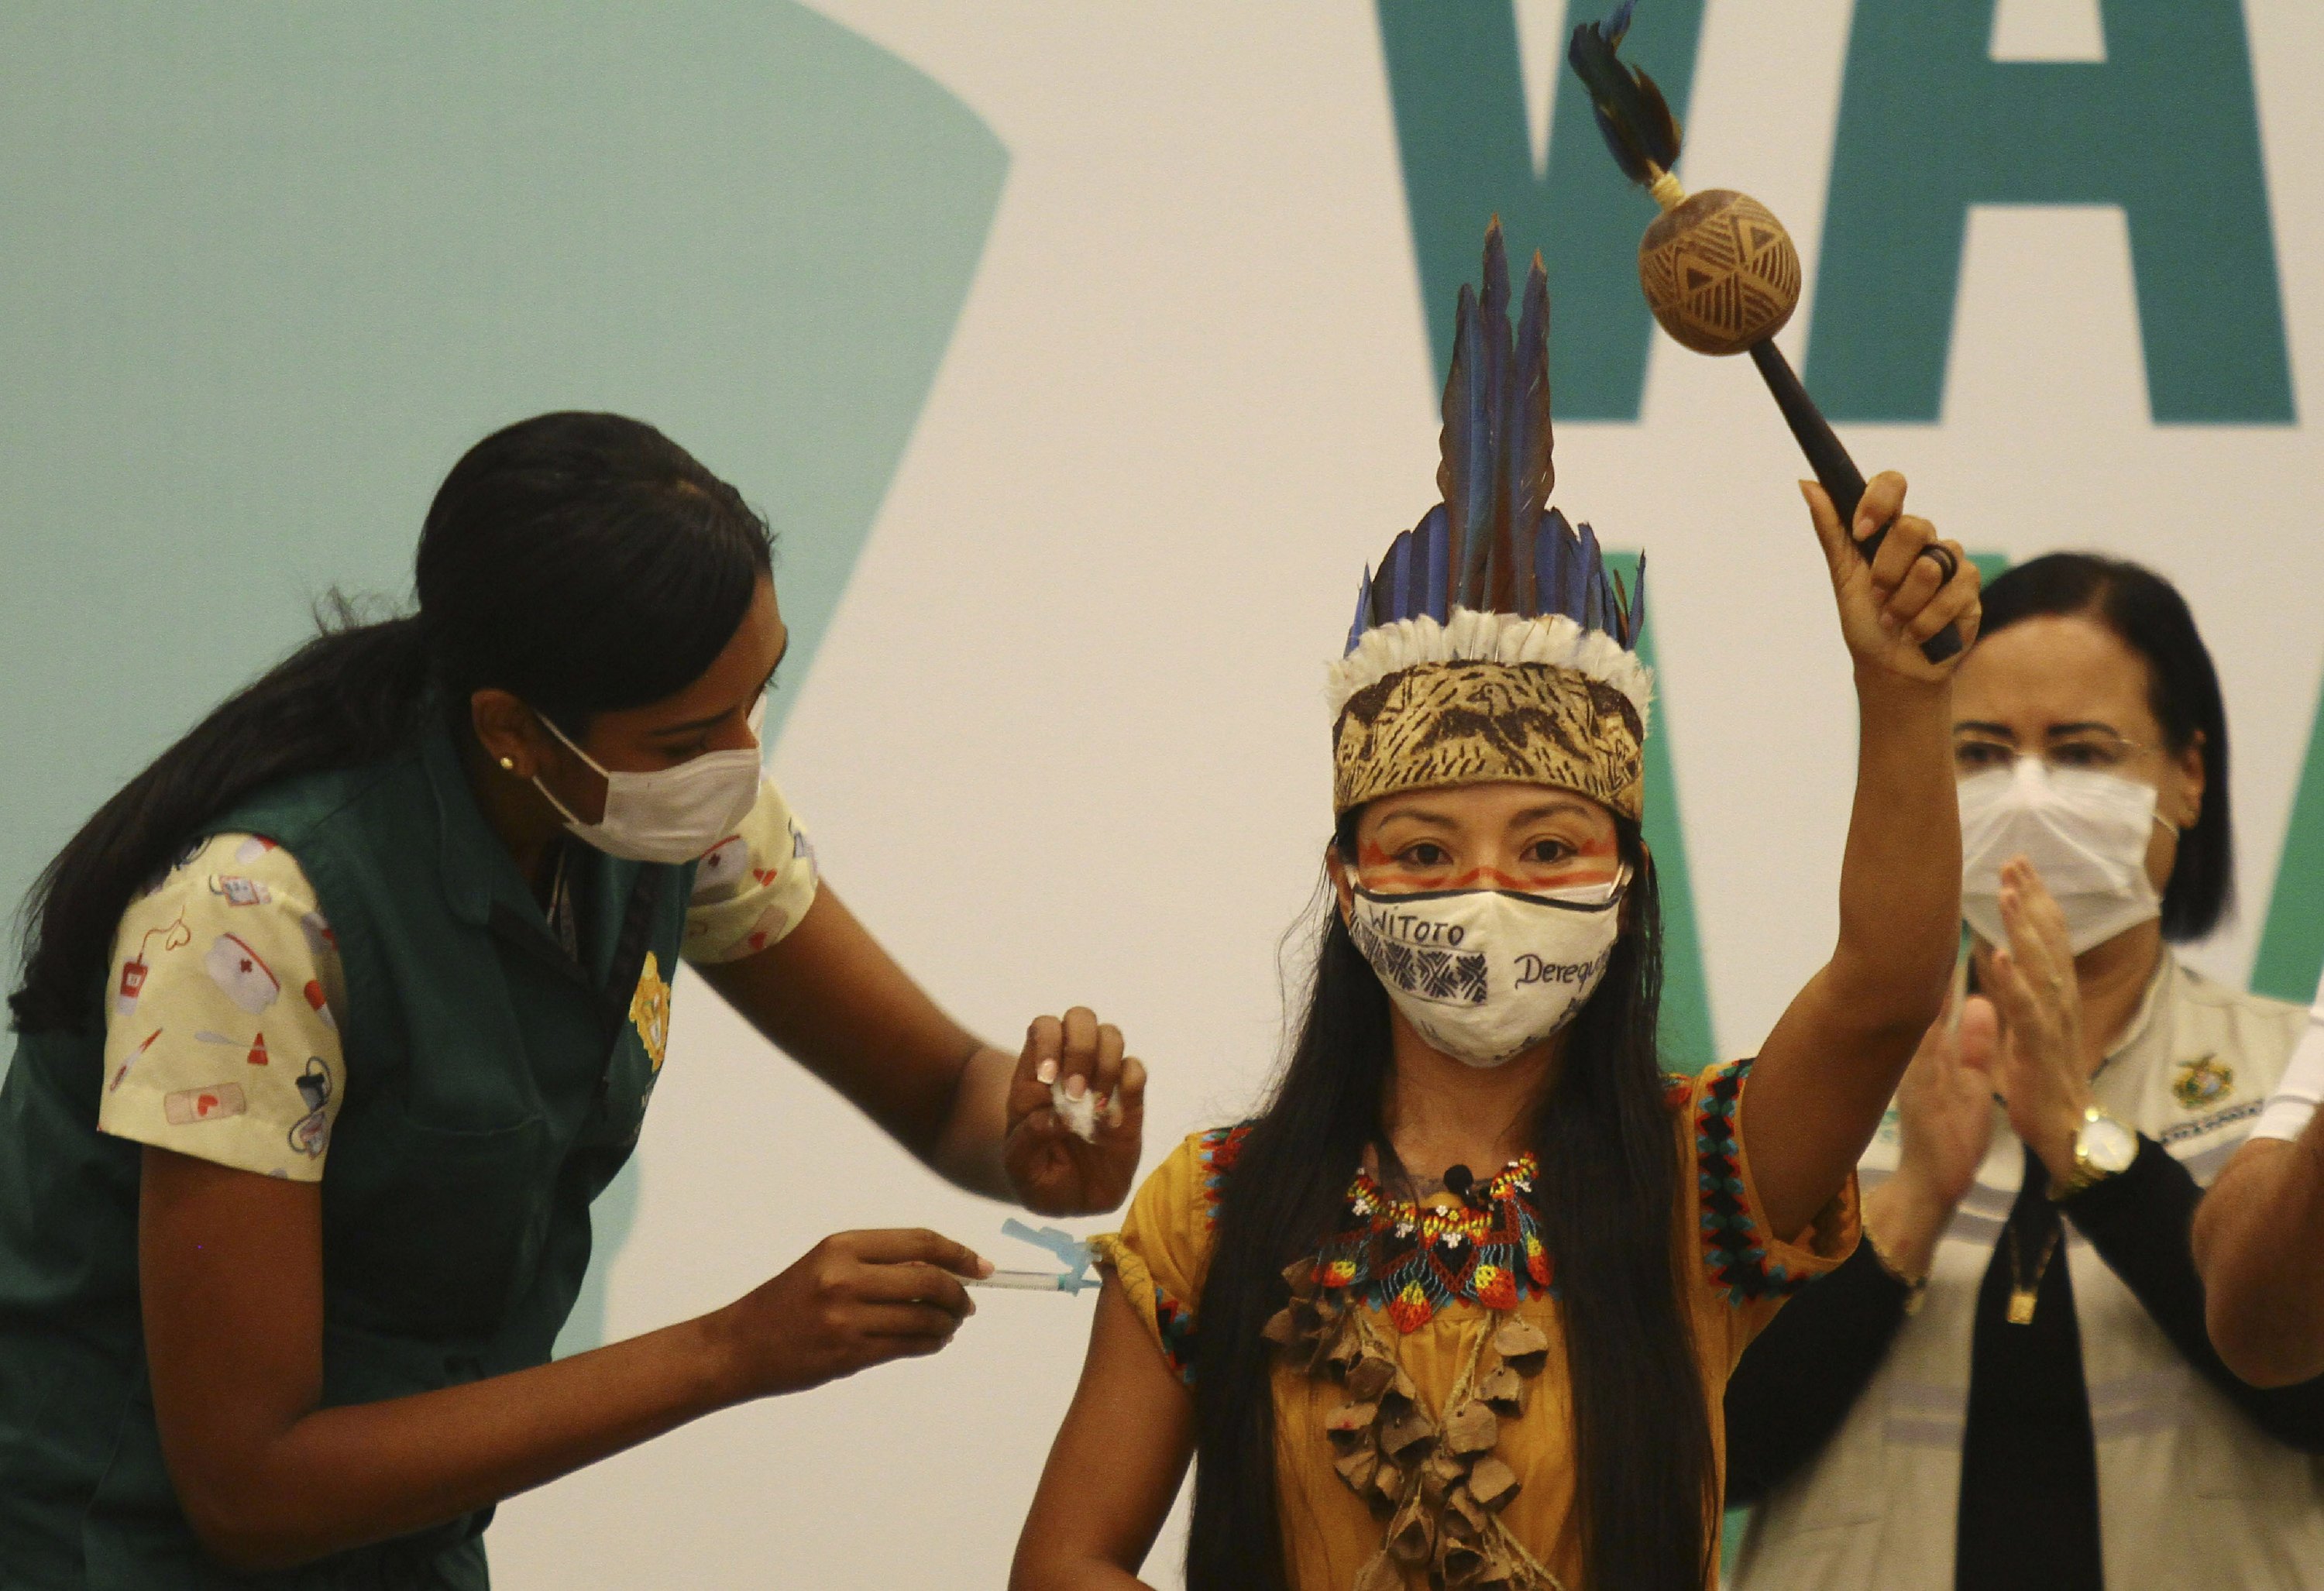 Oxygen-deprived city in the Brazilian Amazon starts immunization